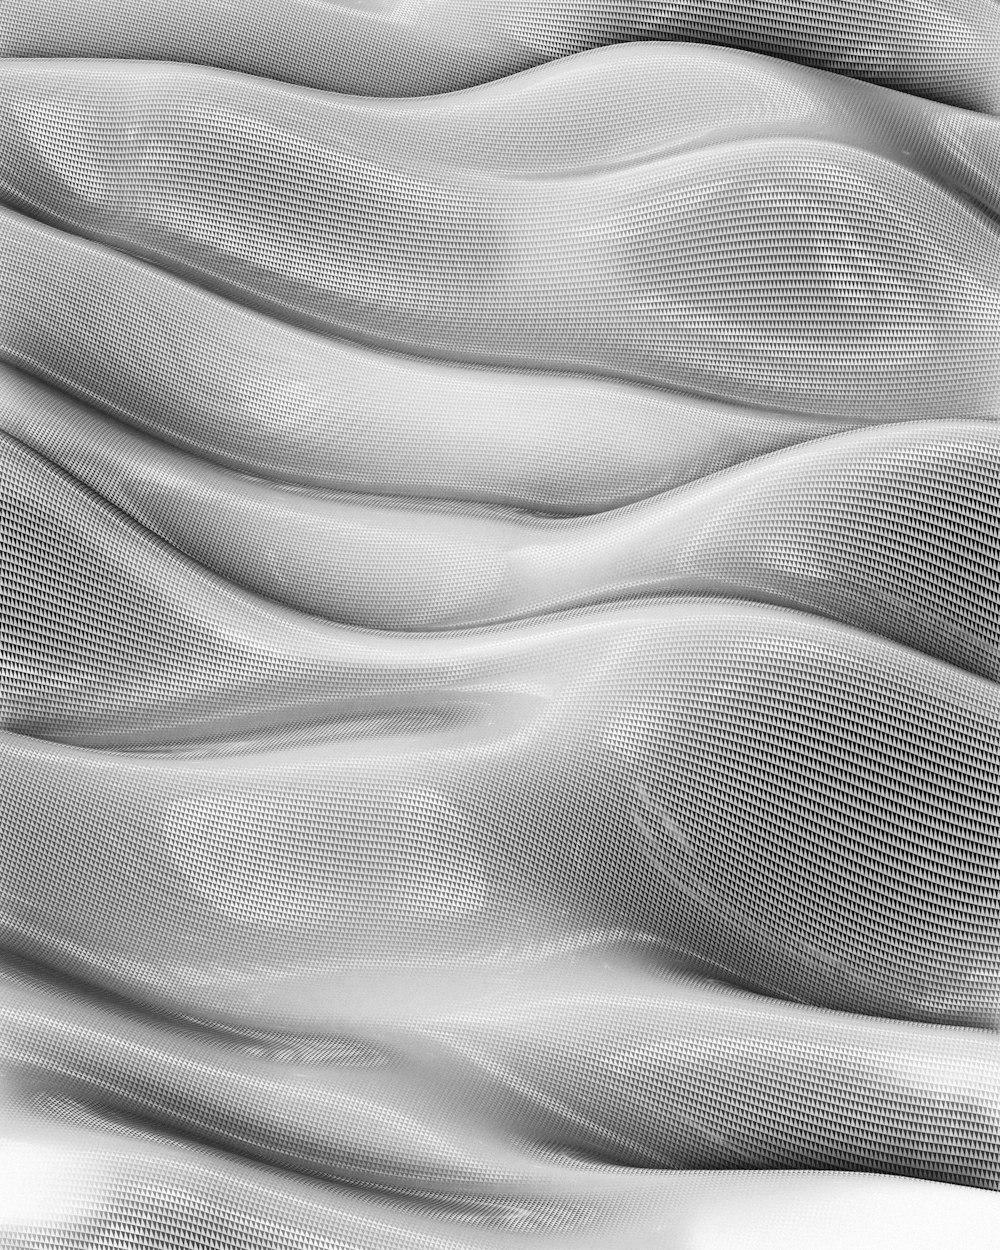 Una foto in bianco e nero di una superficie ondulata